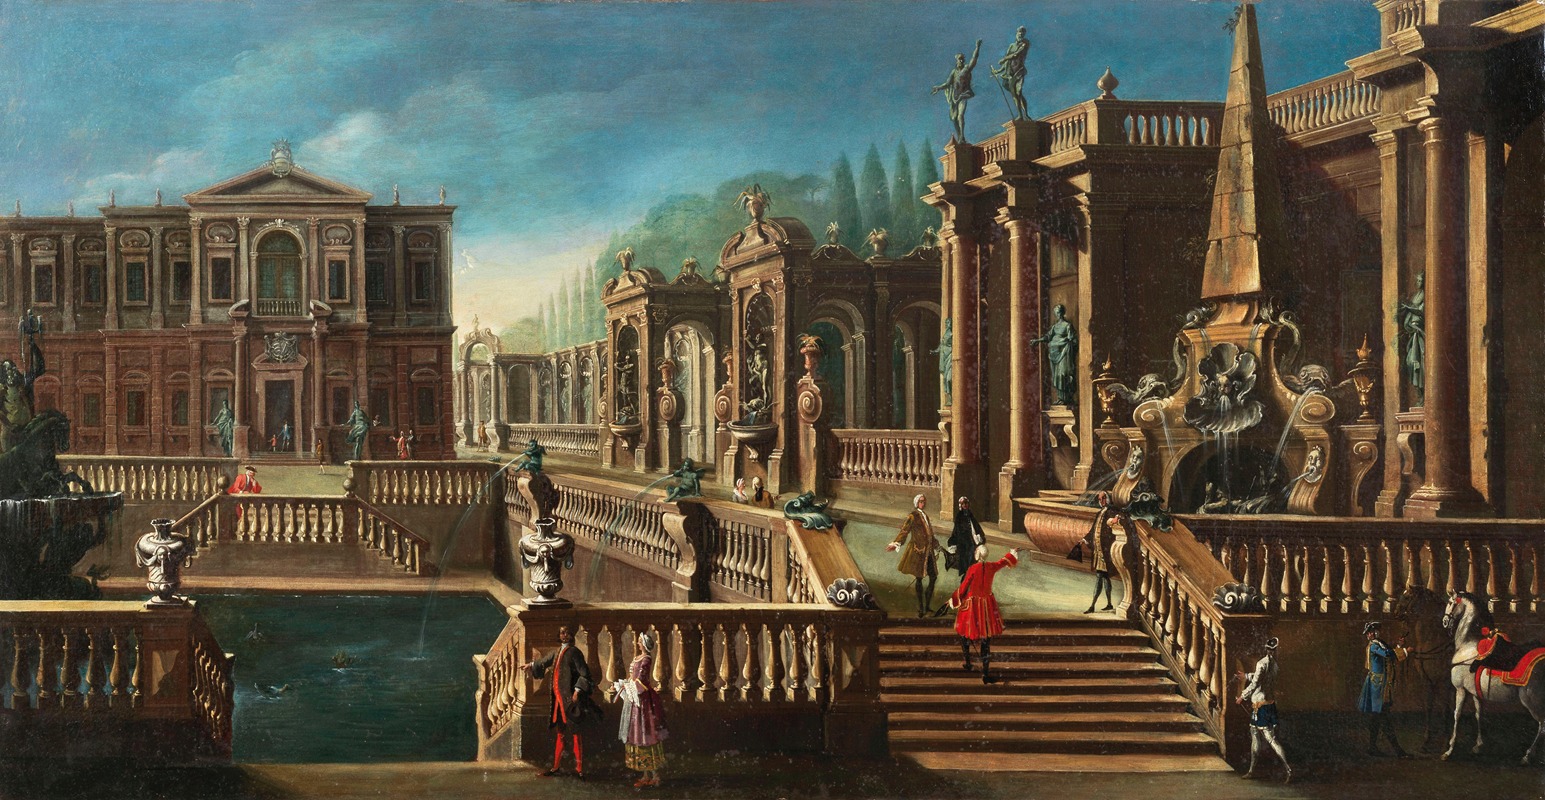 Francesco Battaglioli - View of a villa with a fountain, gardens and elegant figures